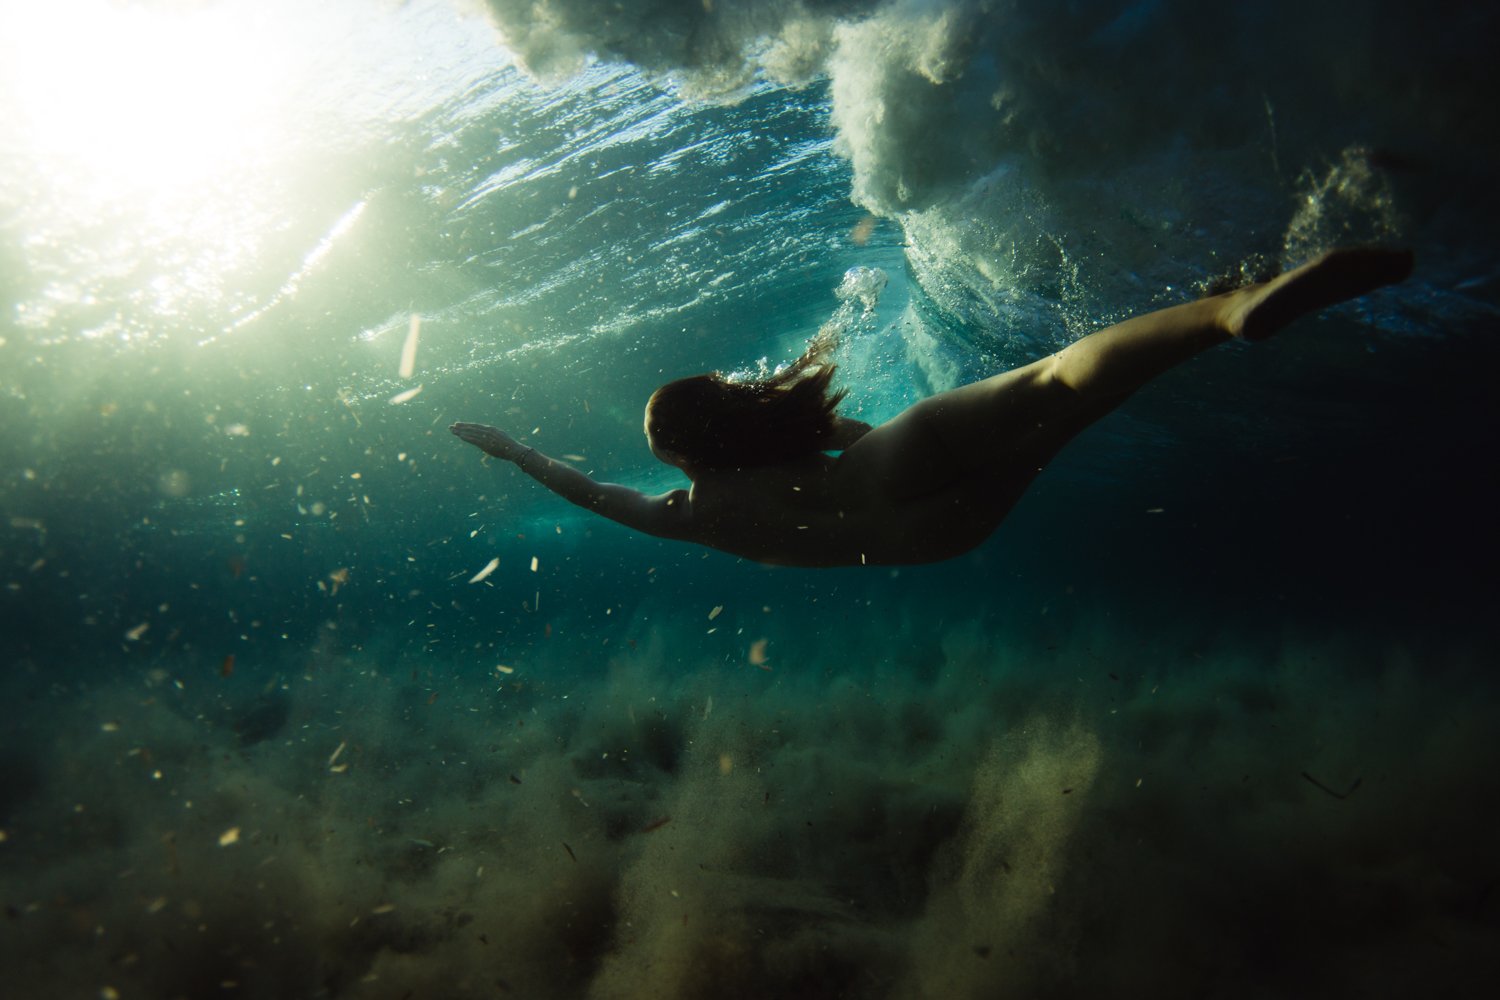 underwater corse corsica sea mediterranean island france french photographer photographe ajaccio Krista Espino Capo di feno wave nude nue femme woman fine art photography-39.jpg